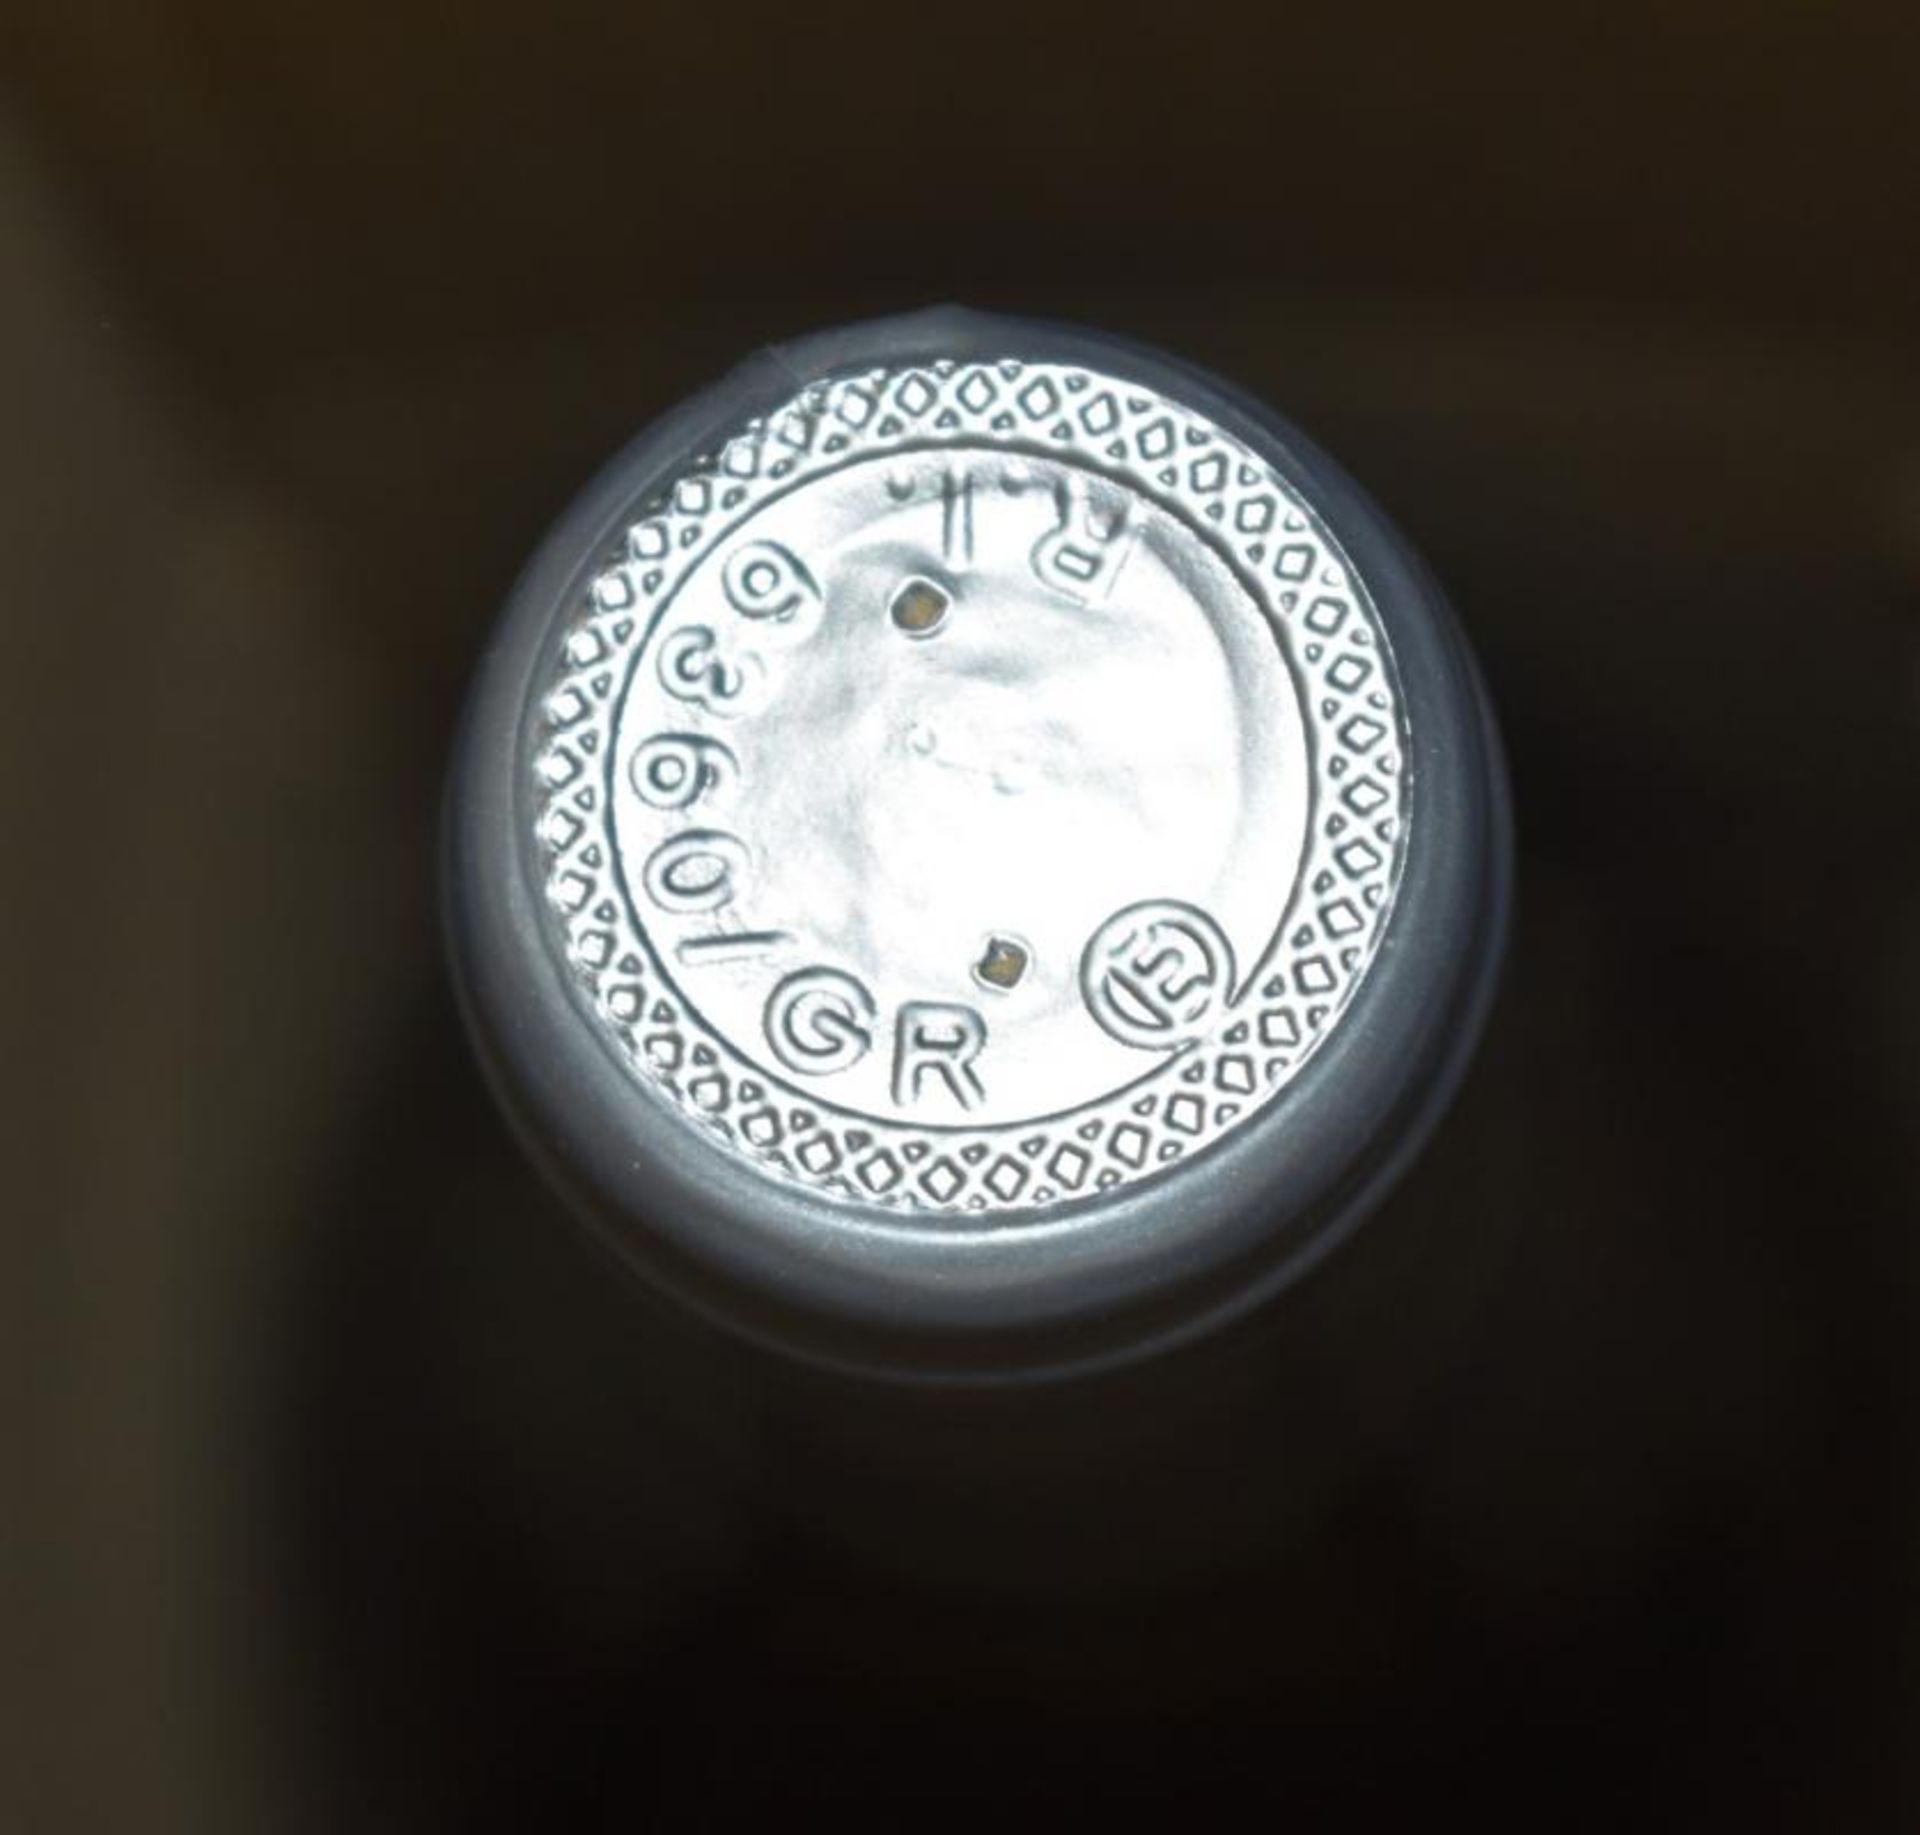 12 x Bottles of Stefano Di Blasi 2019 Vermentino Toscana 13.5% Wine - 750ml Bottles - Drink Until 20 - Image 6 of 6